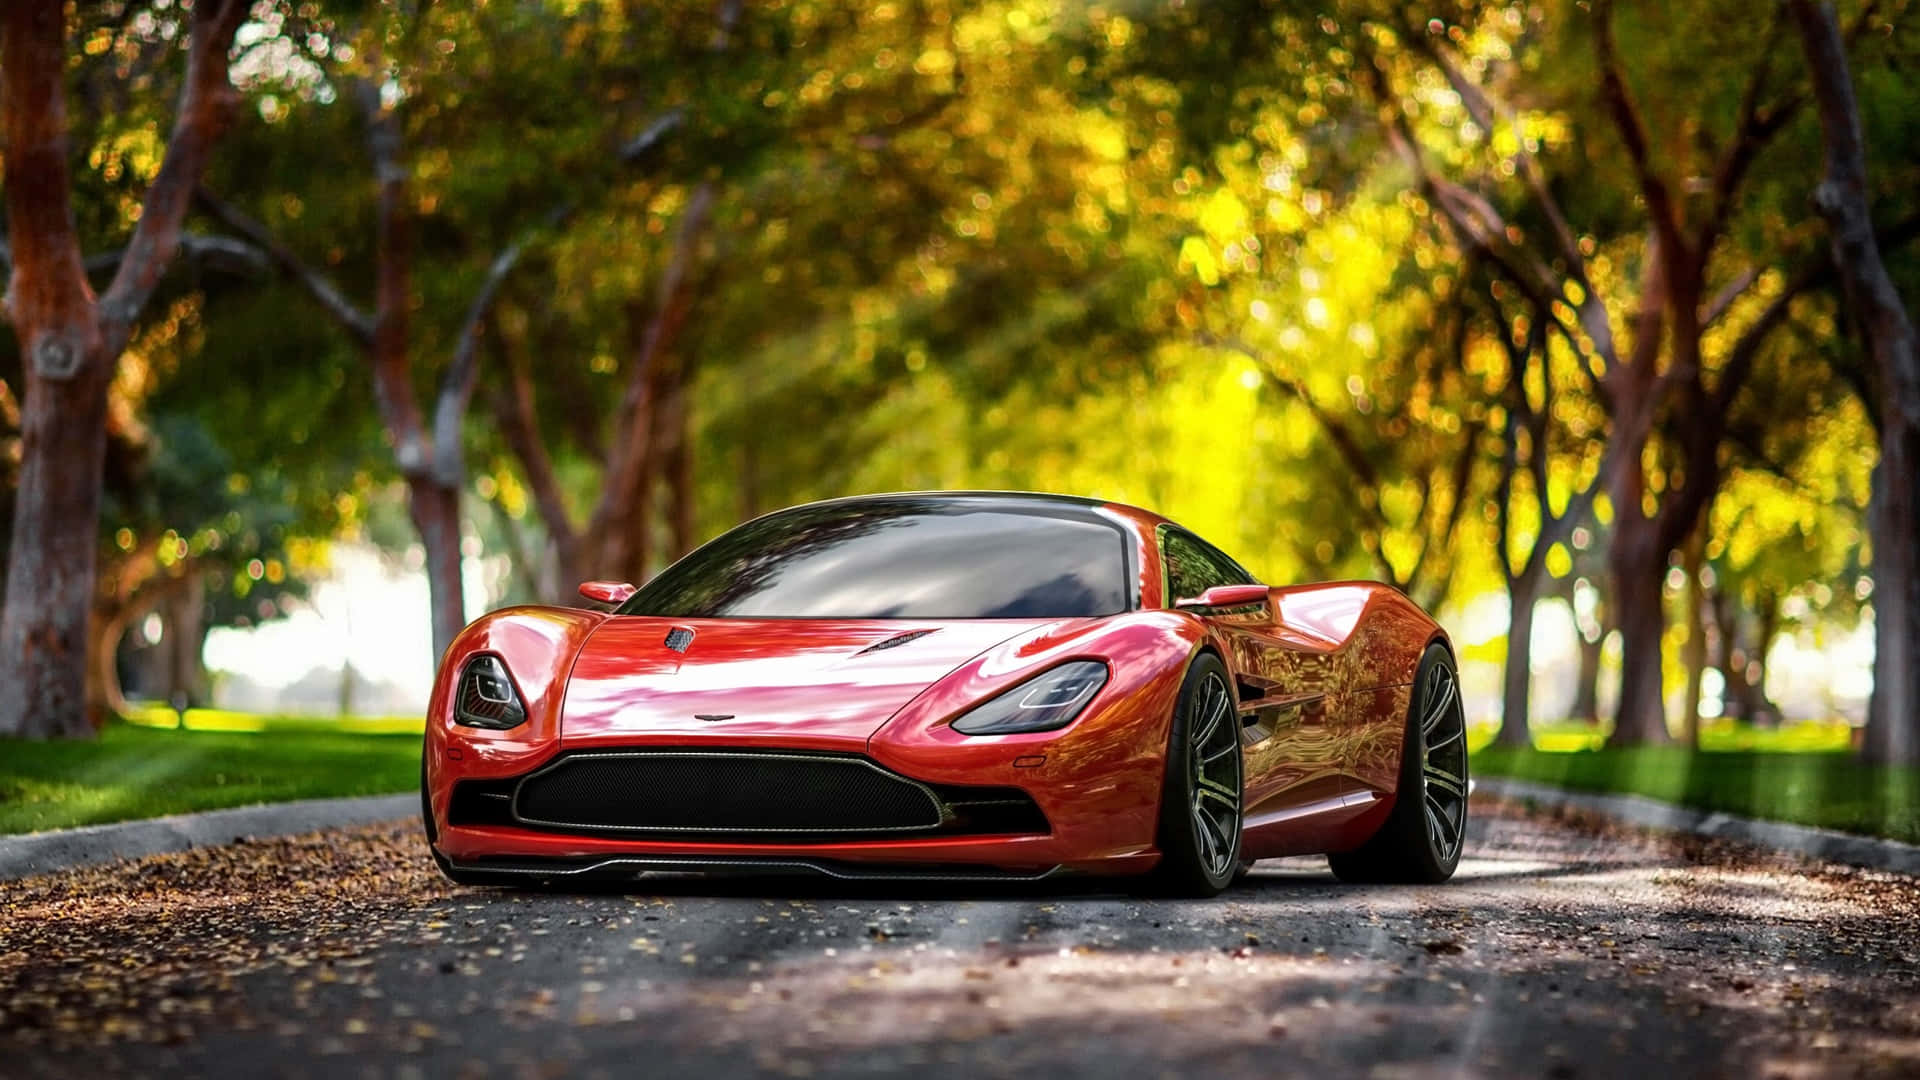 Supercar Aston Martin Vanquish Zagato Wallpaper